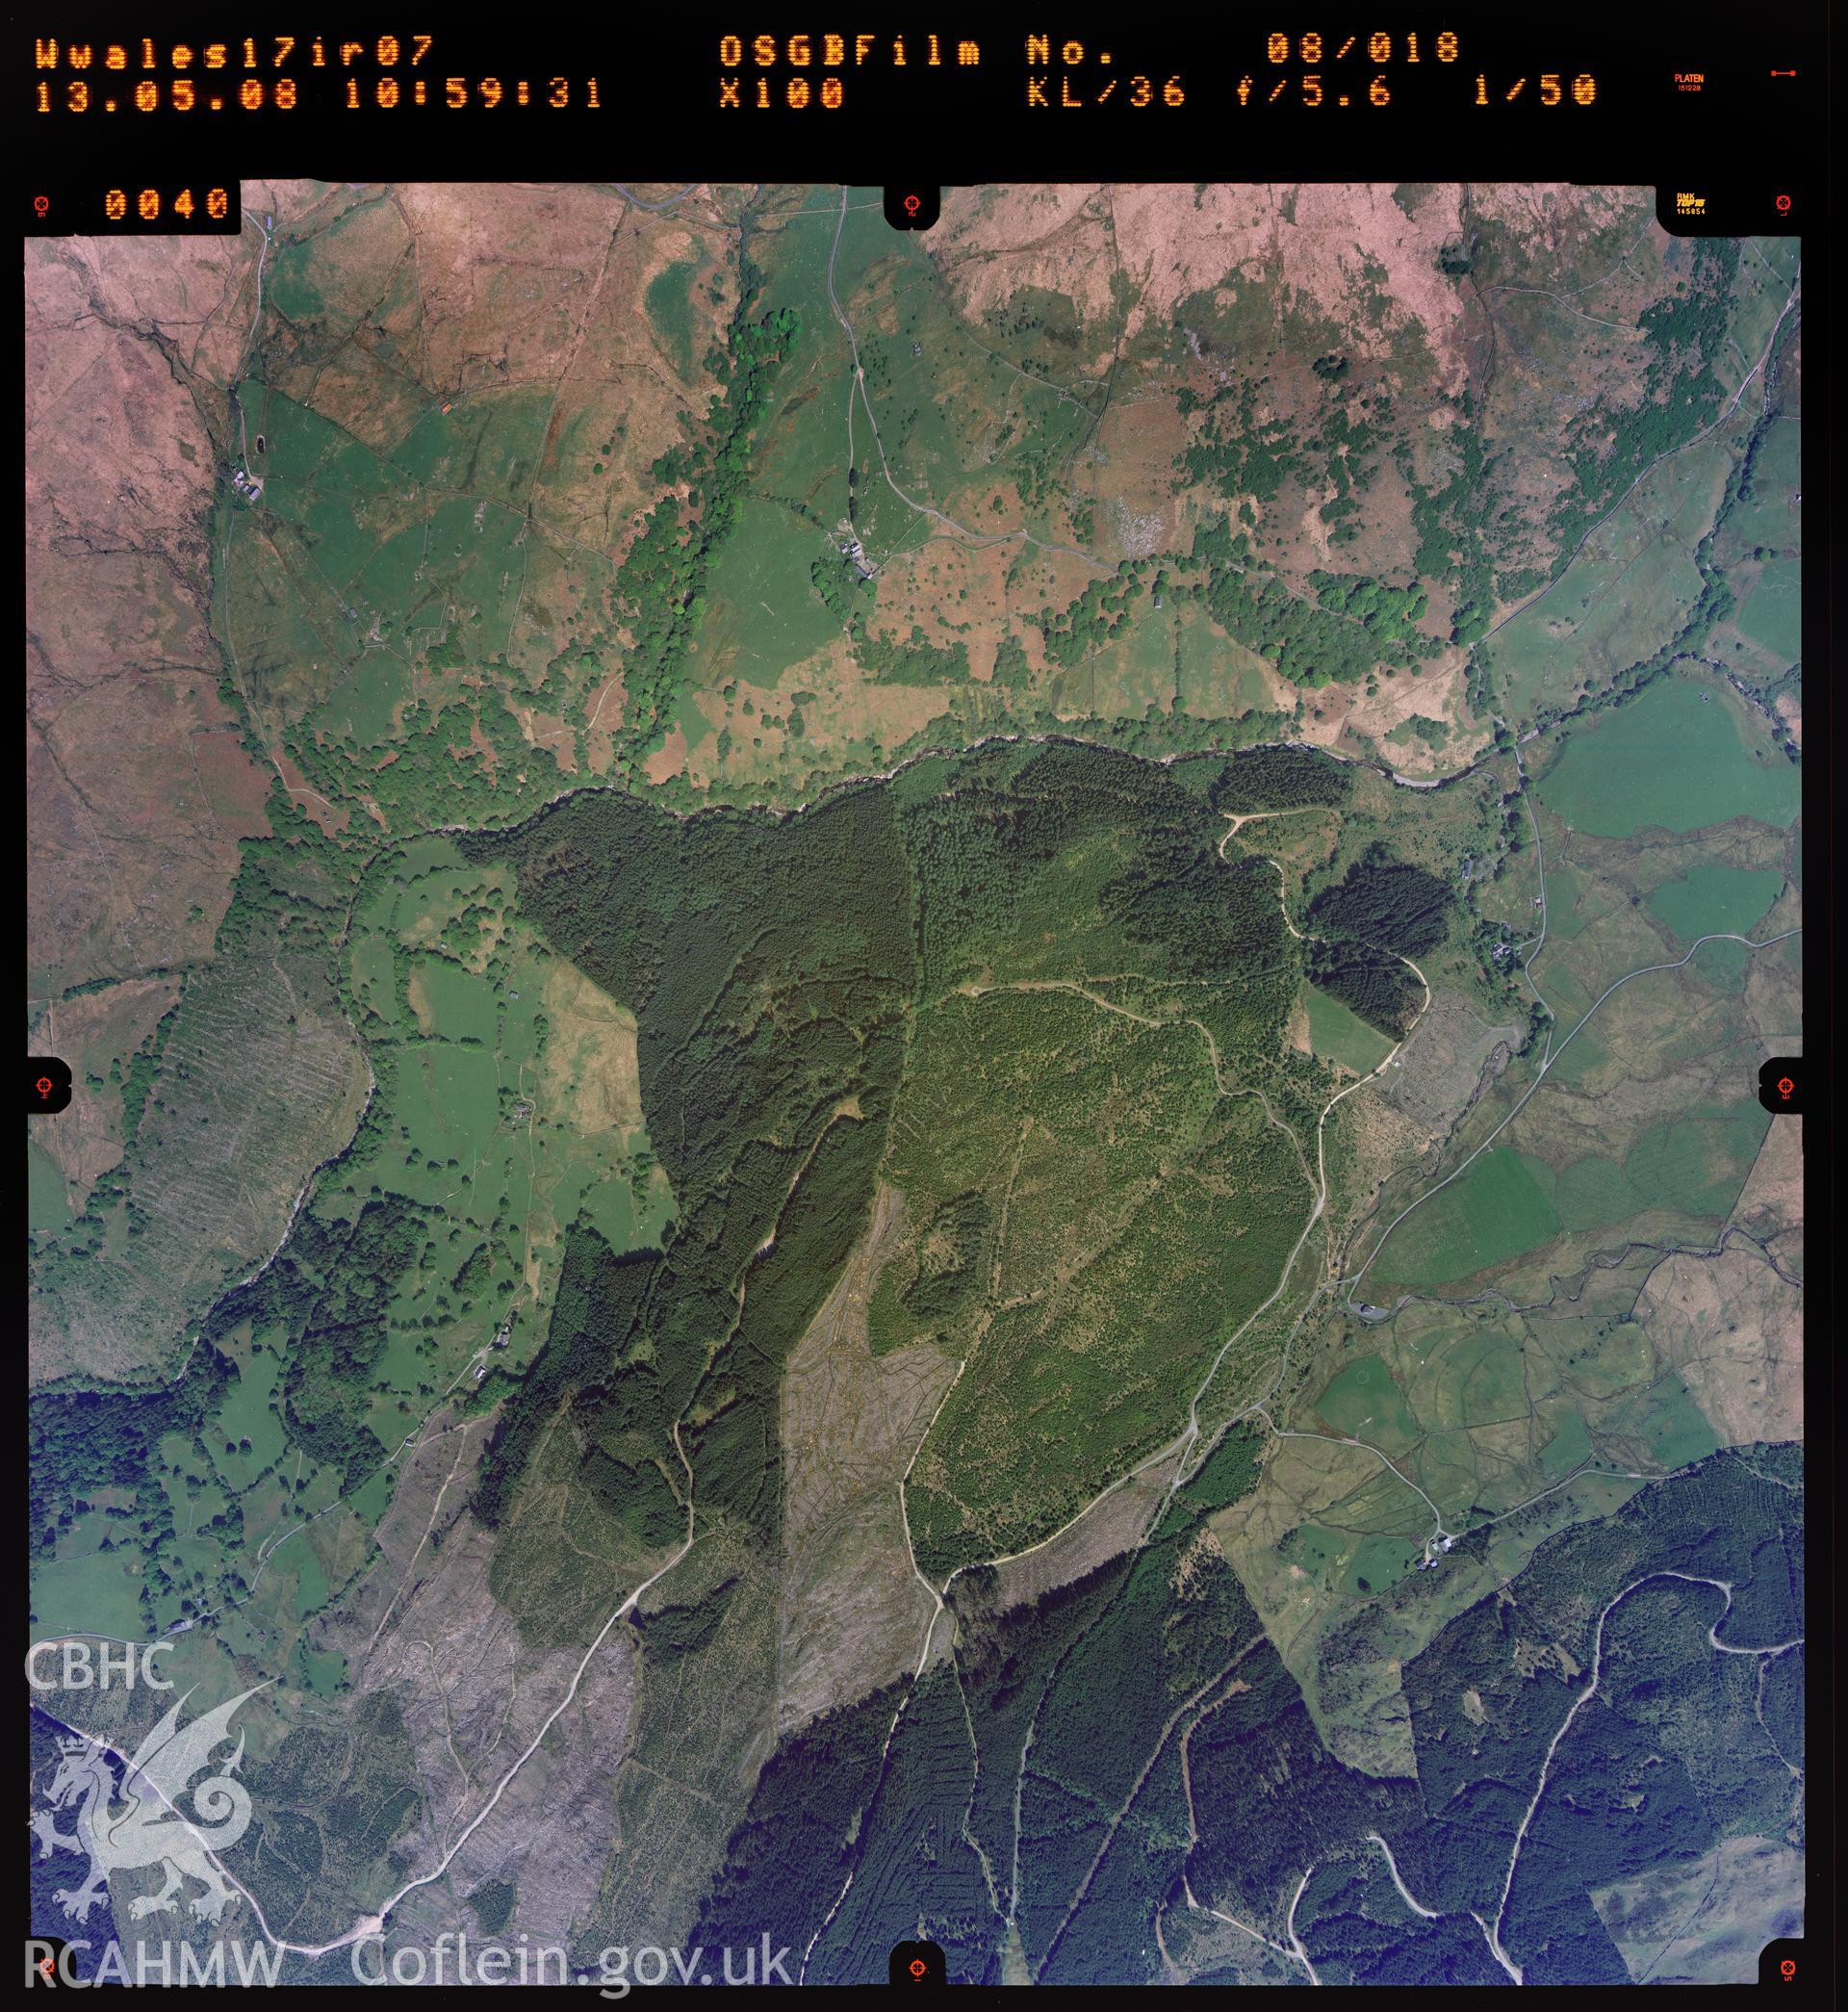 Digitized copy of a colour aerial photograph showing the area around Dyffryn Rheidol, Cardiganshire. SN6180., taken by Ordnance Survey, 2008.